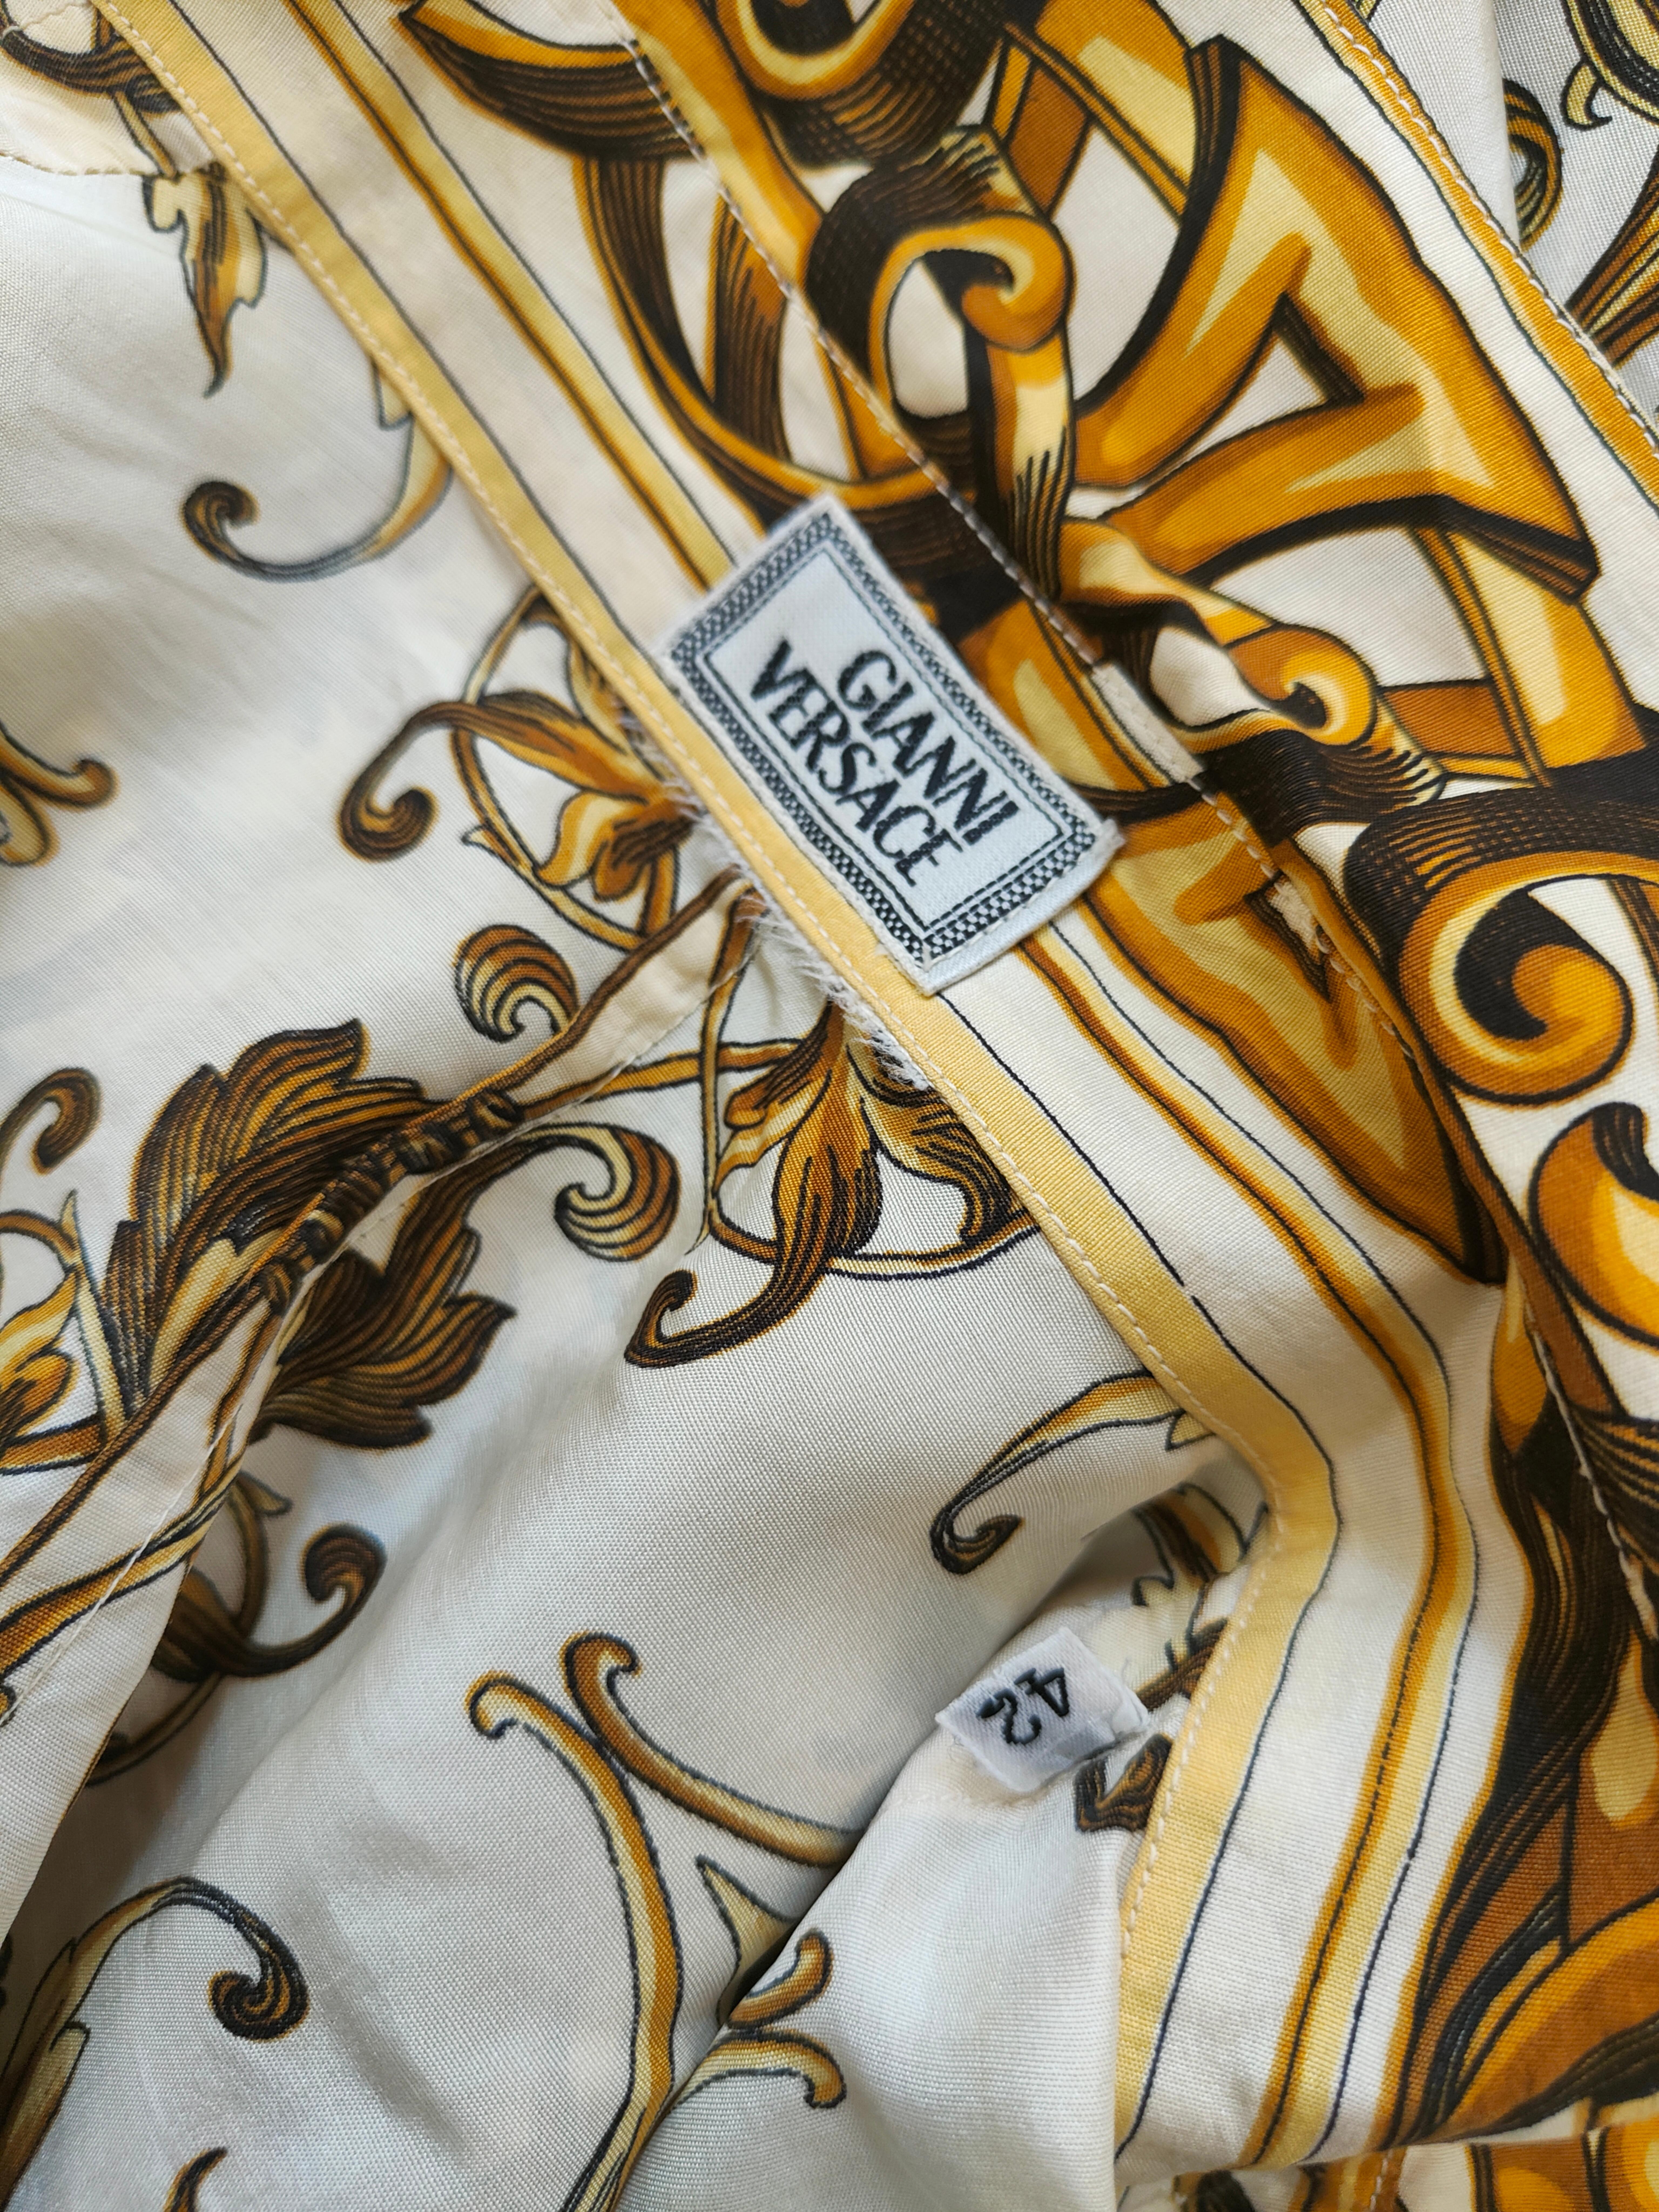 Gianni Versace baroque silk shirt
Size 42